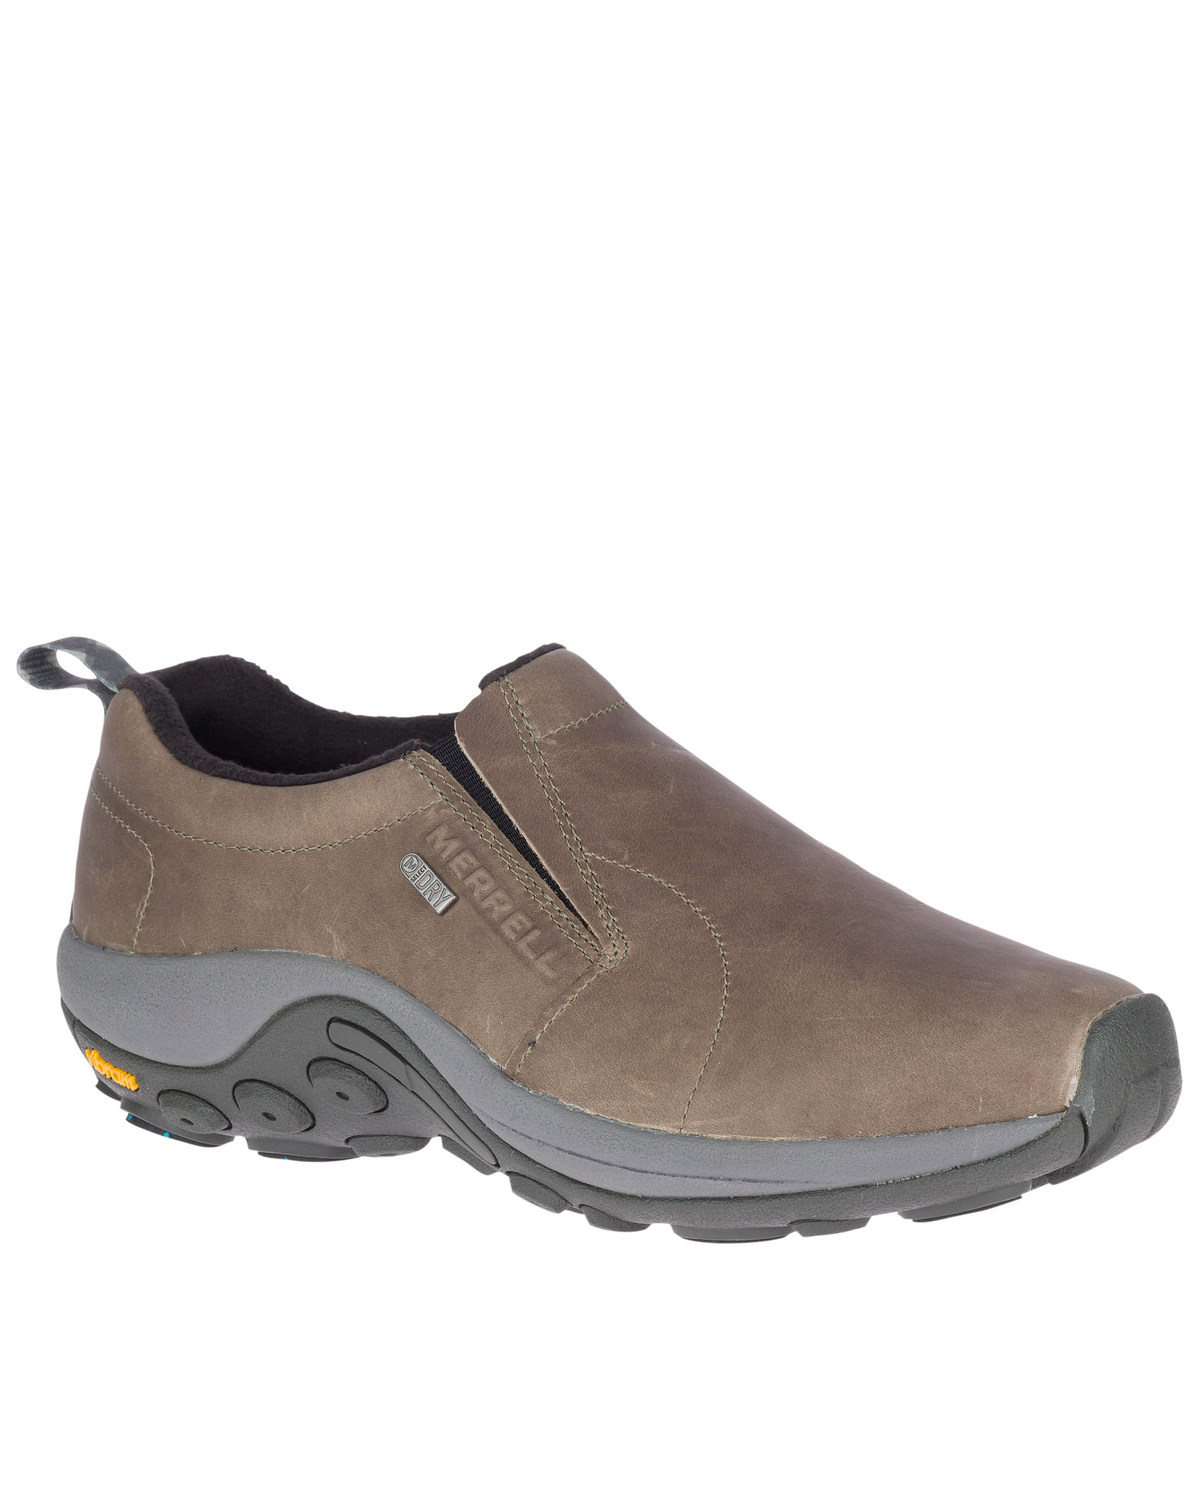 Merrell Men's Jungle Waterproof Hiking Shoes - Soft Toe